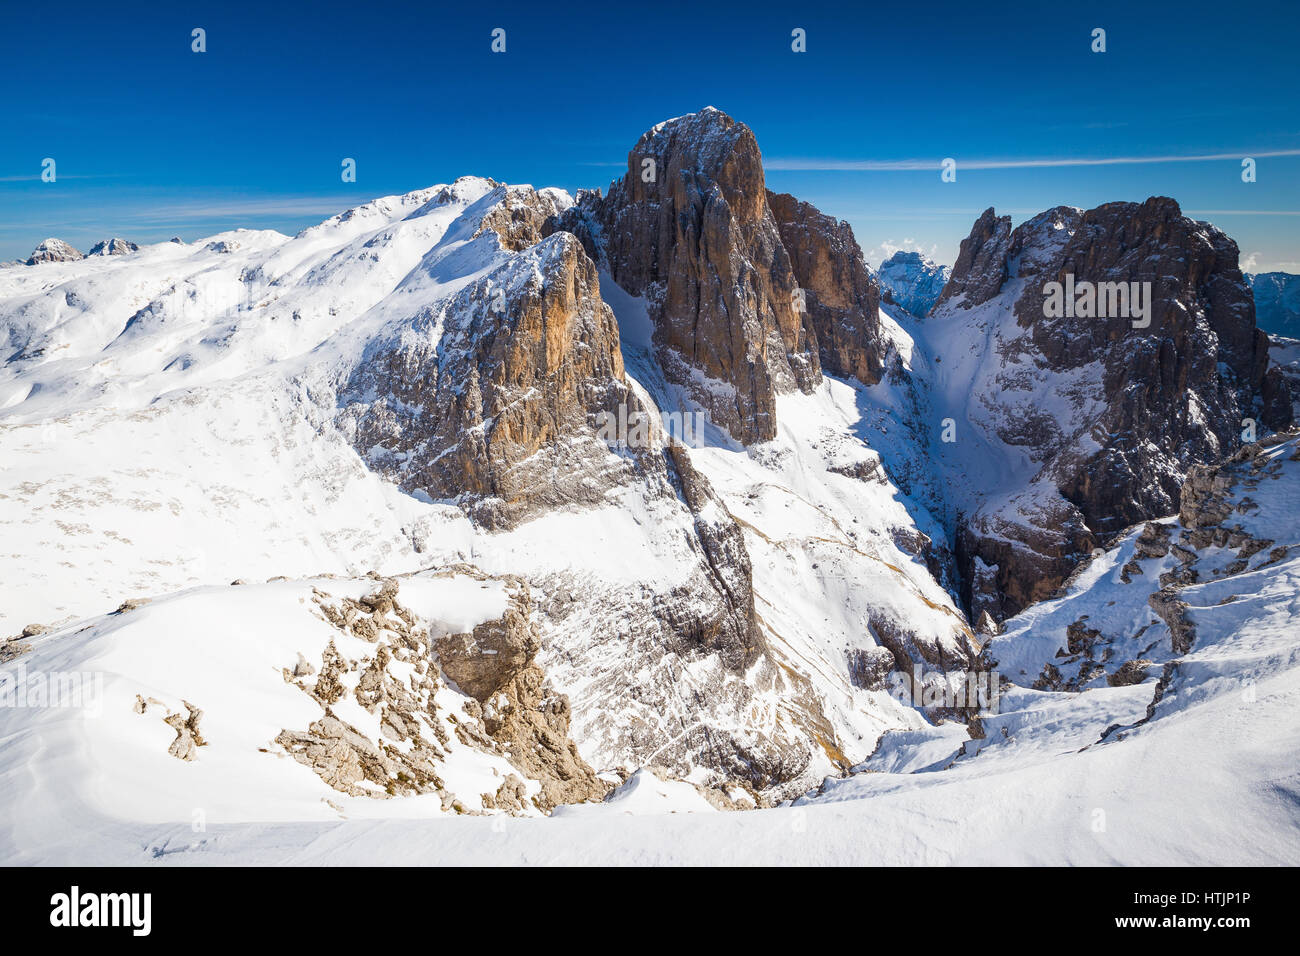 The Pale di San Martino mountain group. The Pala and Val di Roda peaks, Ball pass. The Trentino Dolomites in winter season. Italian Alps. Europe. Stock Photo